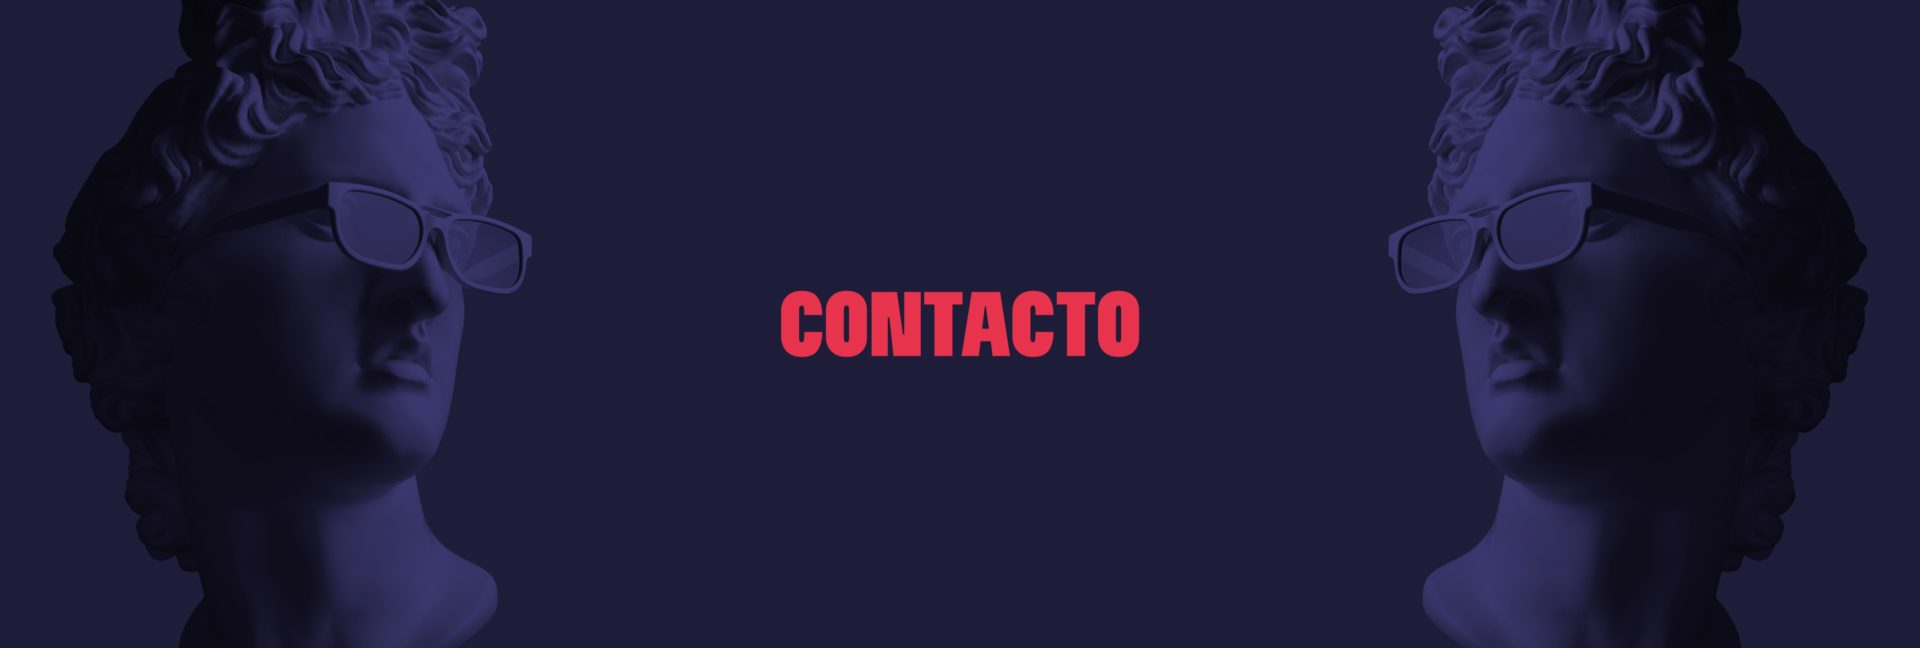 header contacto HC 2022 - Contacto